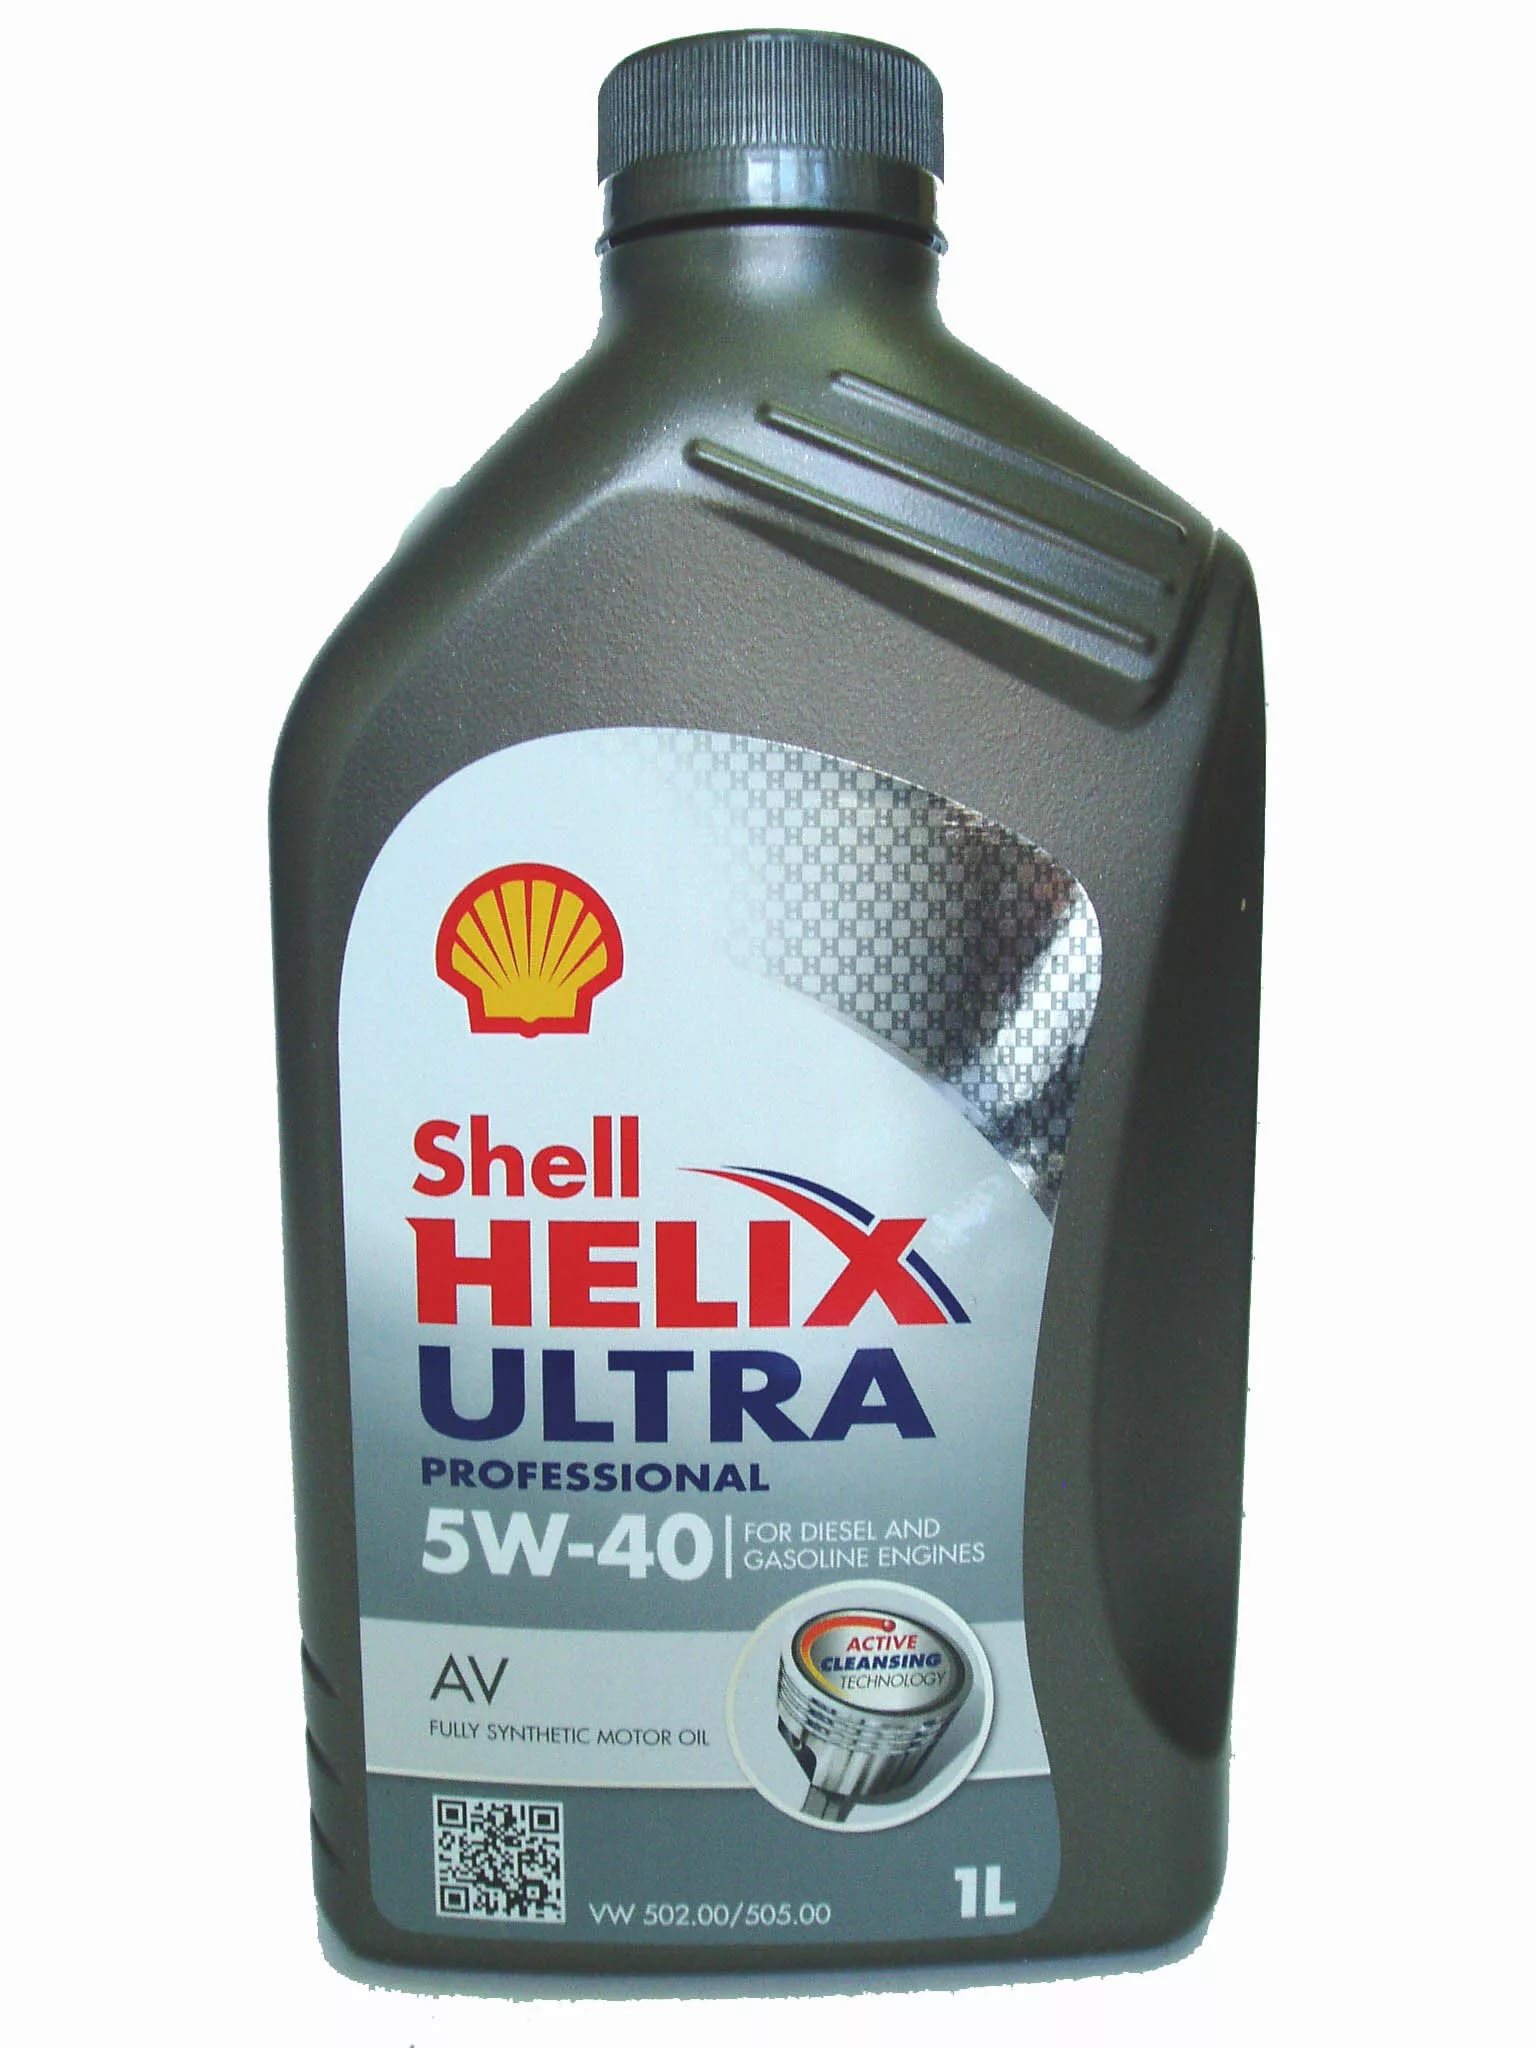 Shell av. Shell Helix Ultra professional av 5w-40 4л. Shell Helix Ultra professional av 5w-40. Shell Helix Ultra professional 5w40. Helix Ultra professional av 5w-40.